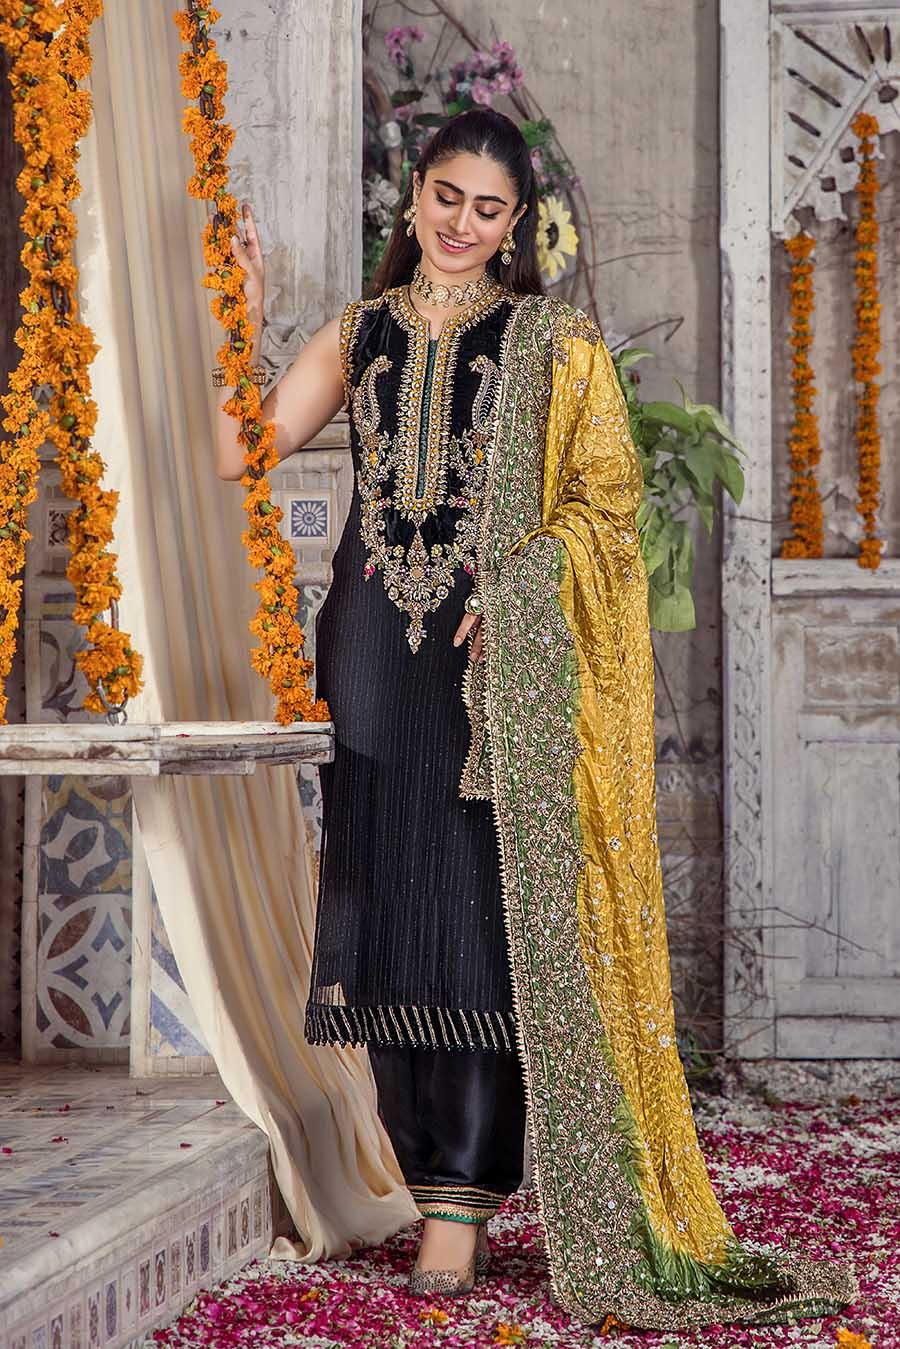 KHUDA BAKSH Pakistani Wedding Traditions | RP-241-17